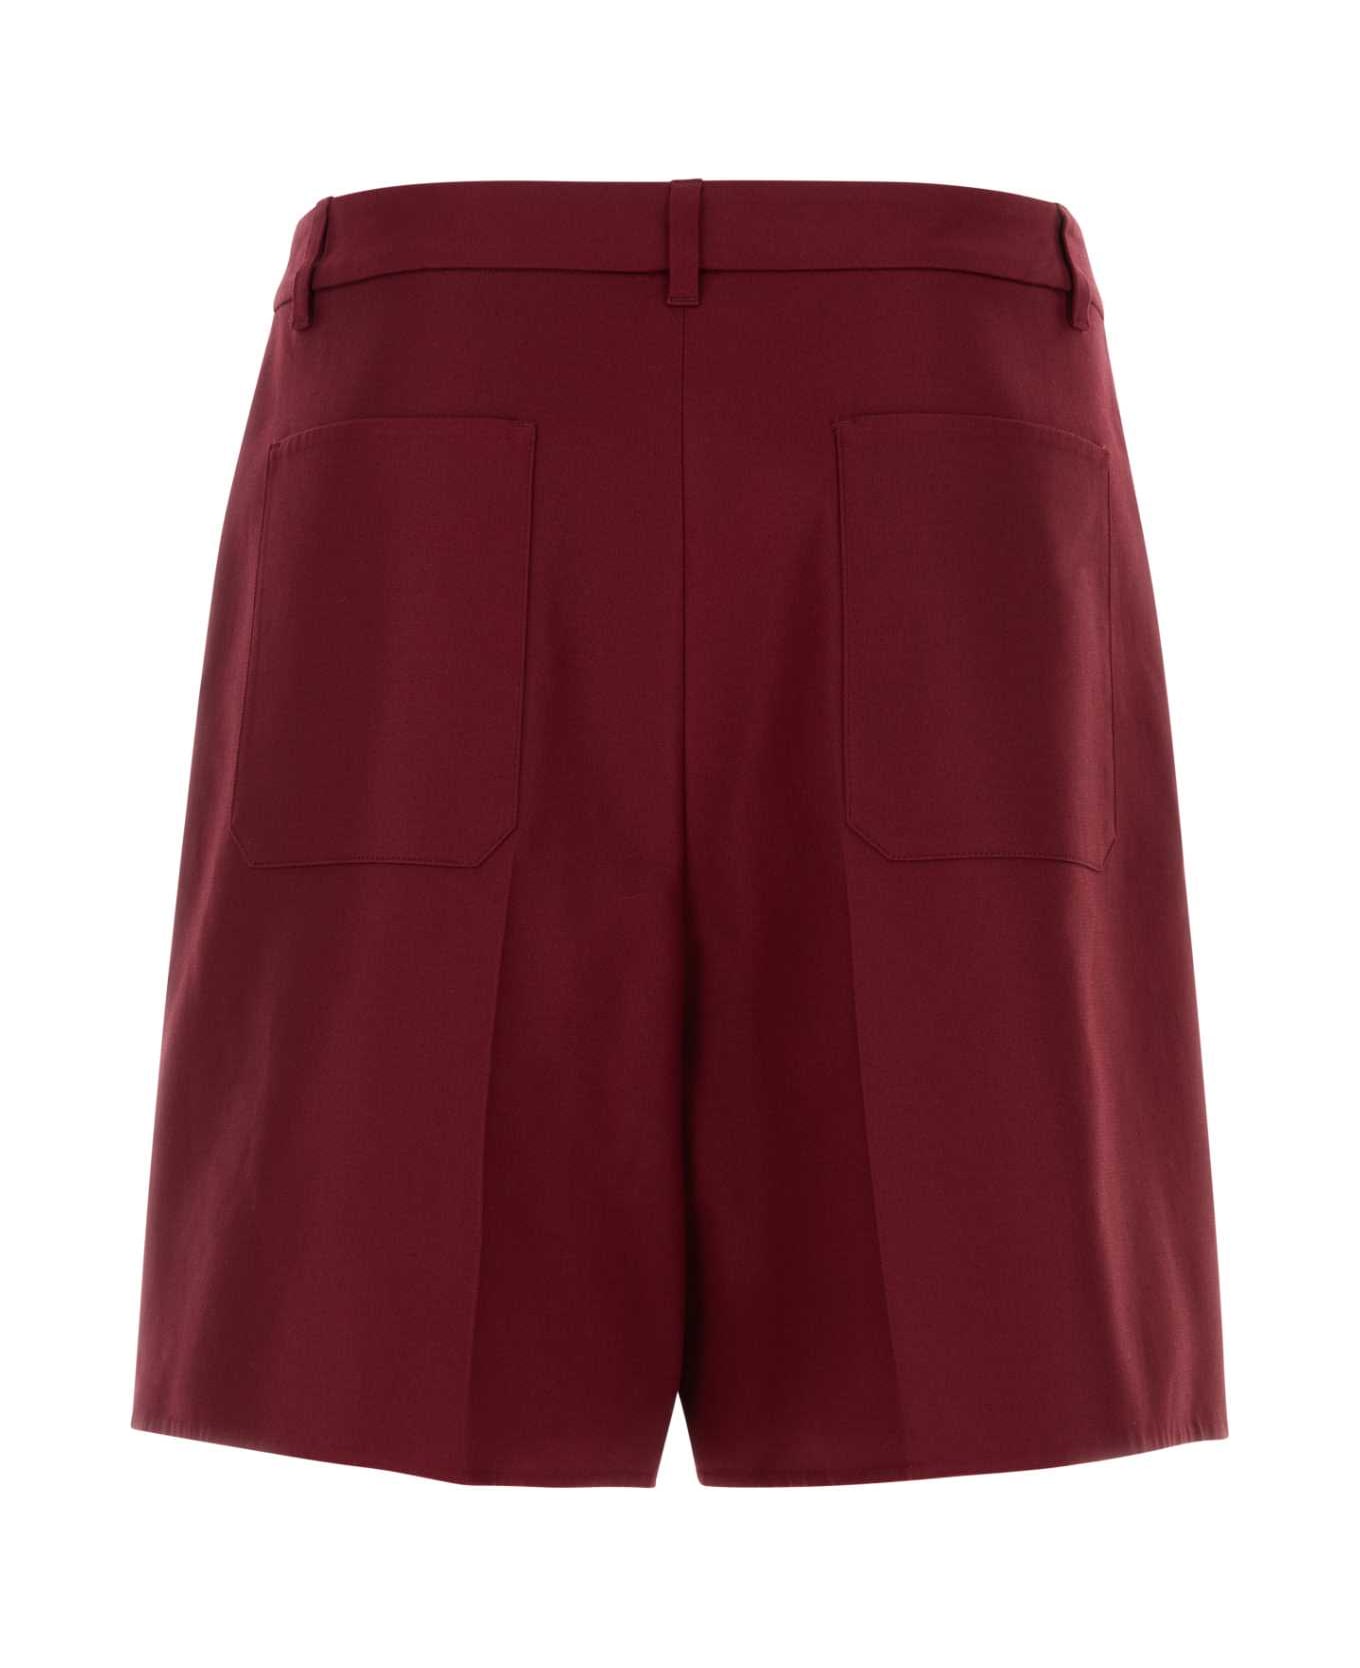 Valentino Garavani Burgundy Cotton Bermuda Shorts - RUBIN